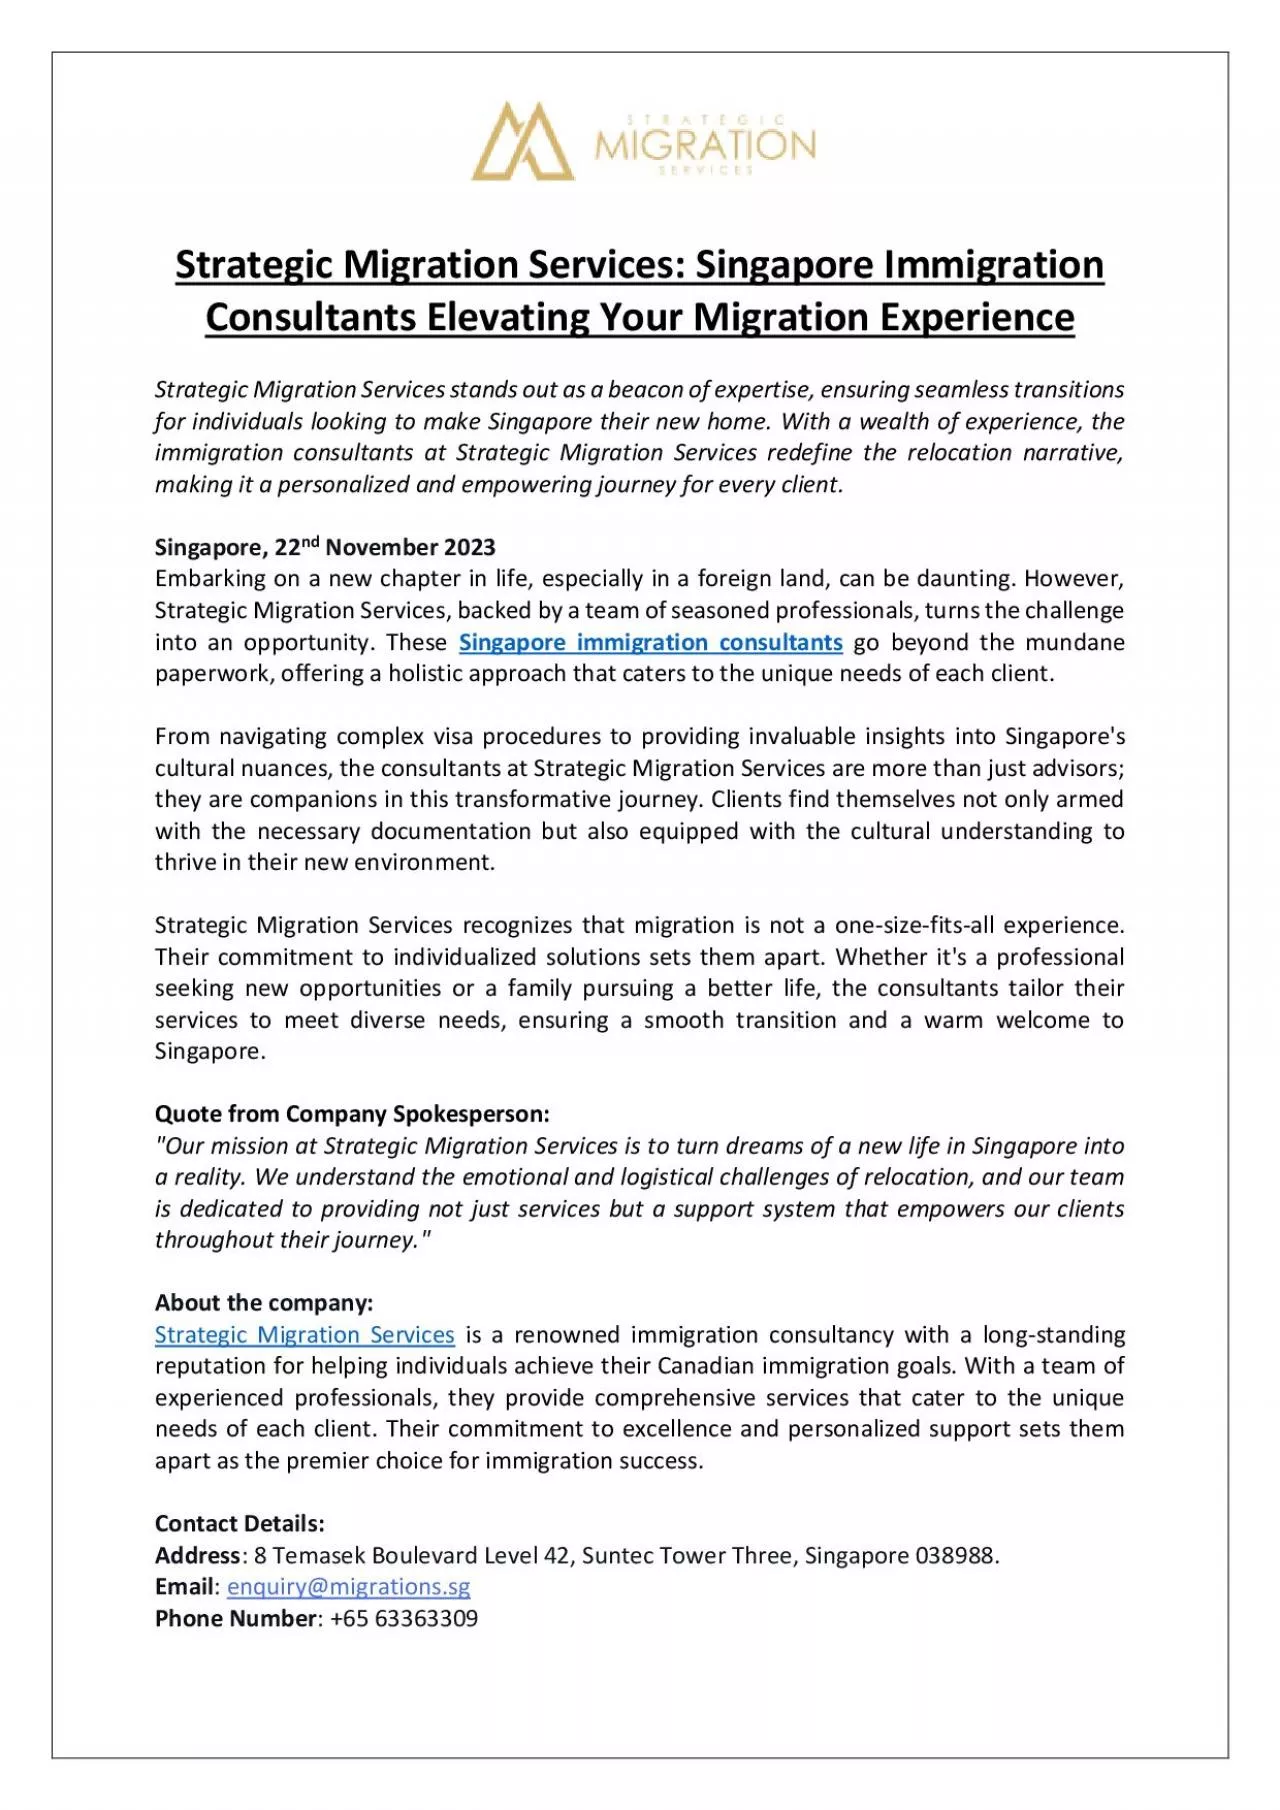 Strategic Migration Services Singapore Immigration Consultants Elevate Your Migration